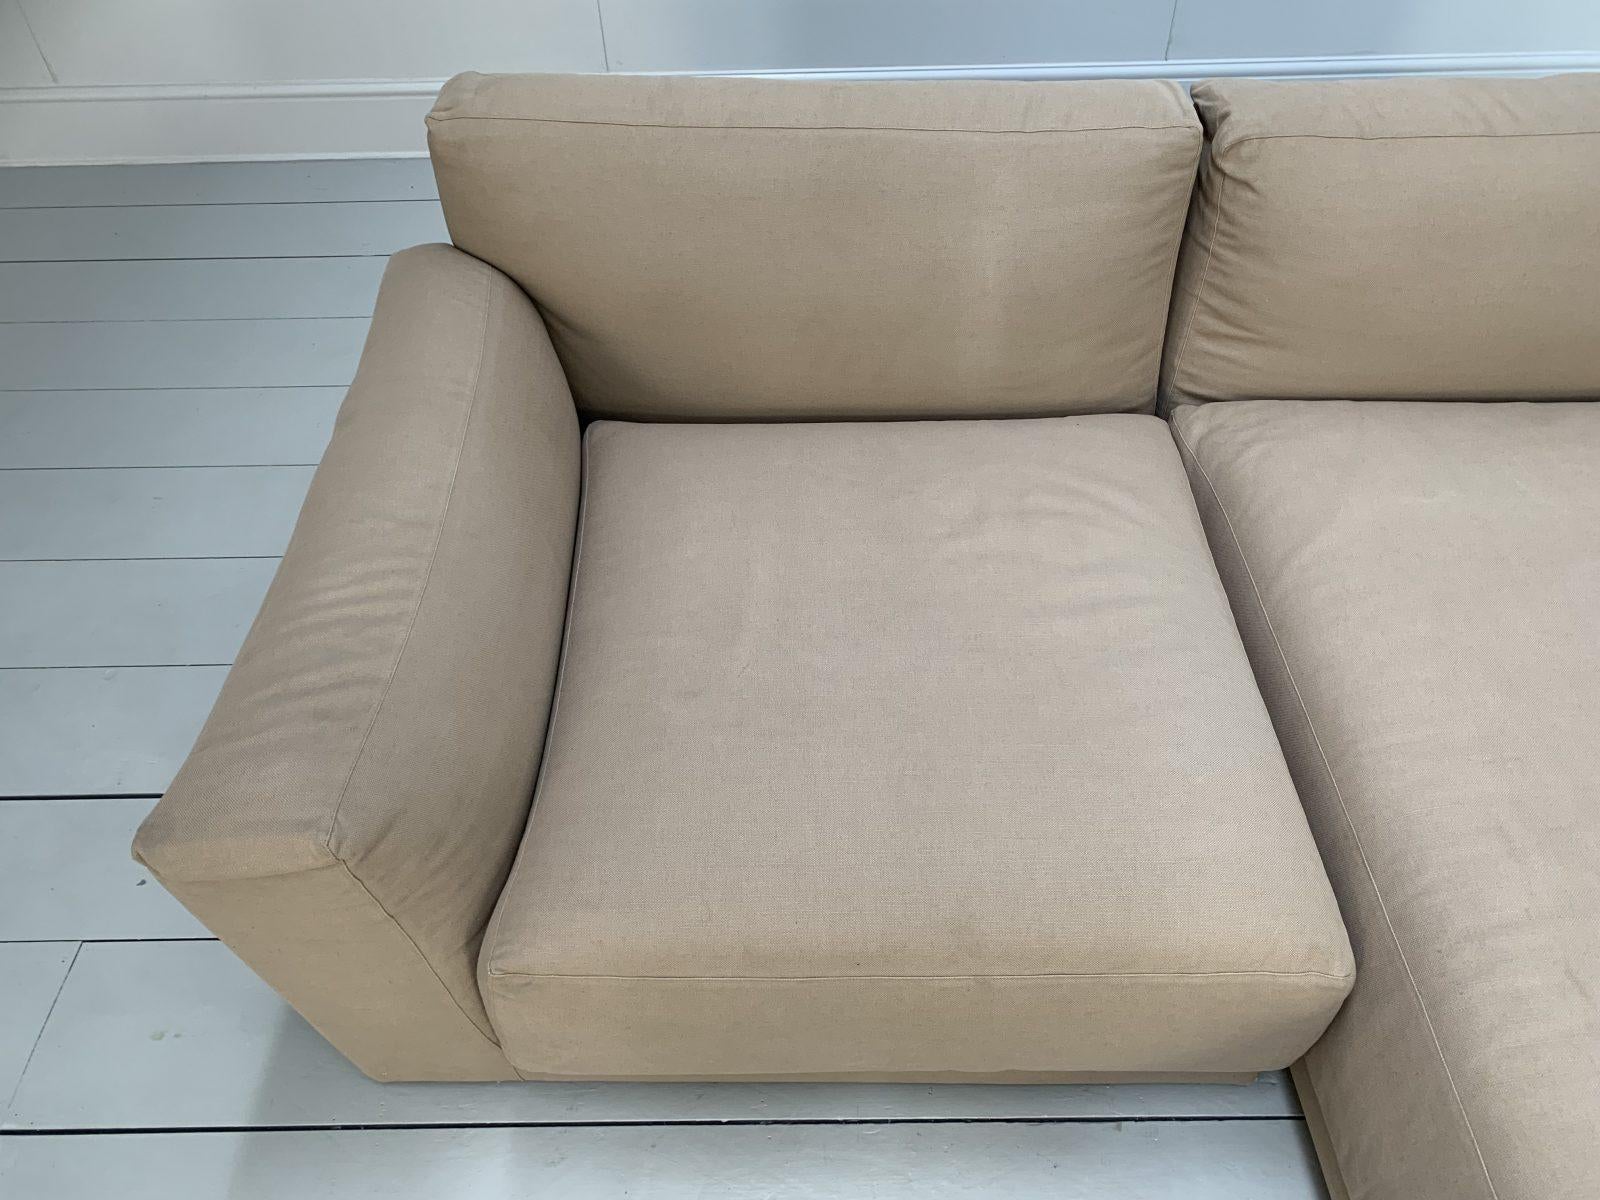 B&B Italia “Luis” 3-Seat Compact L-Shape Sofa – In “Ellade” Linen For Sale 5